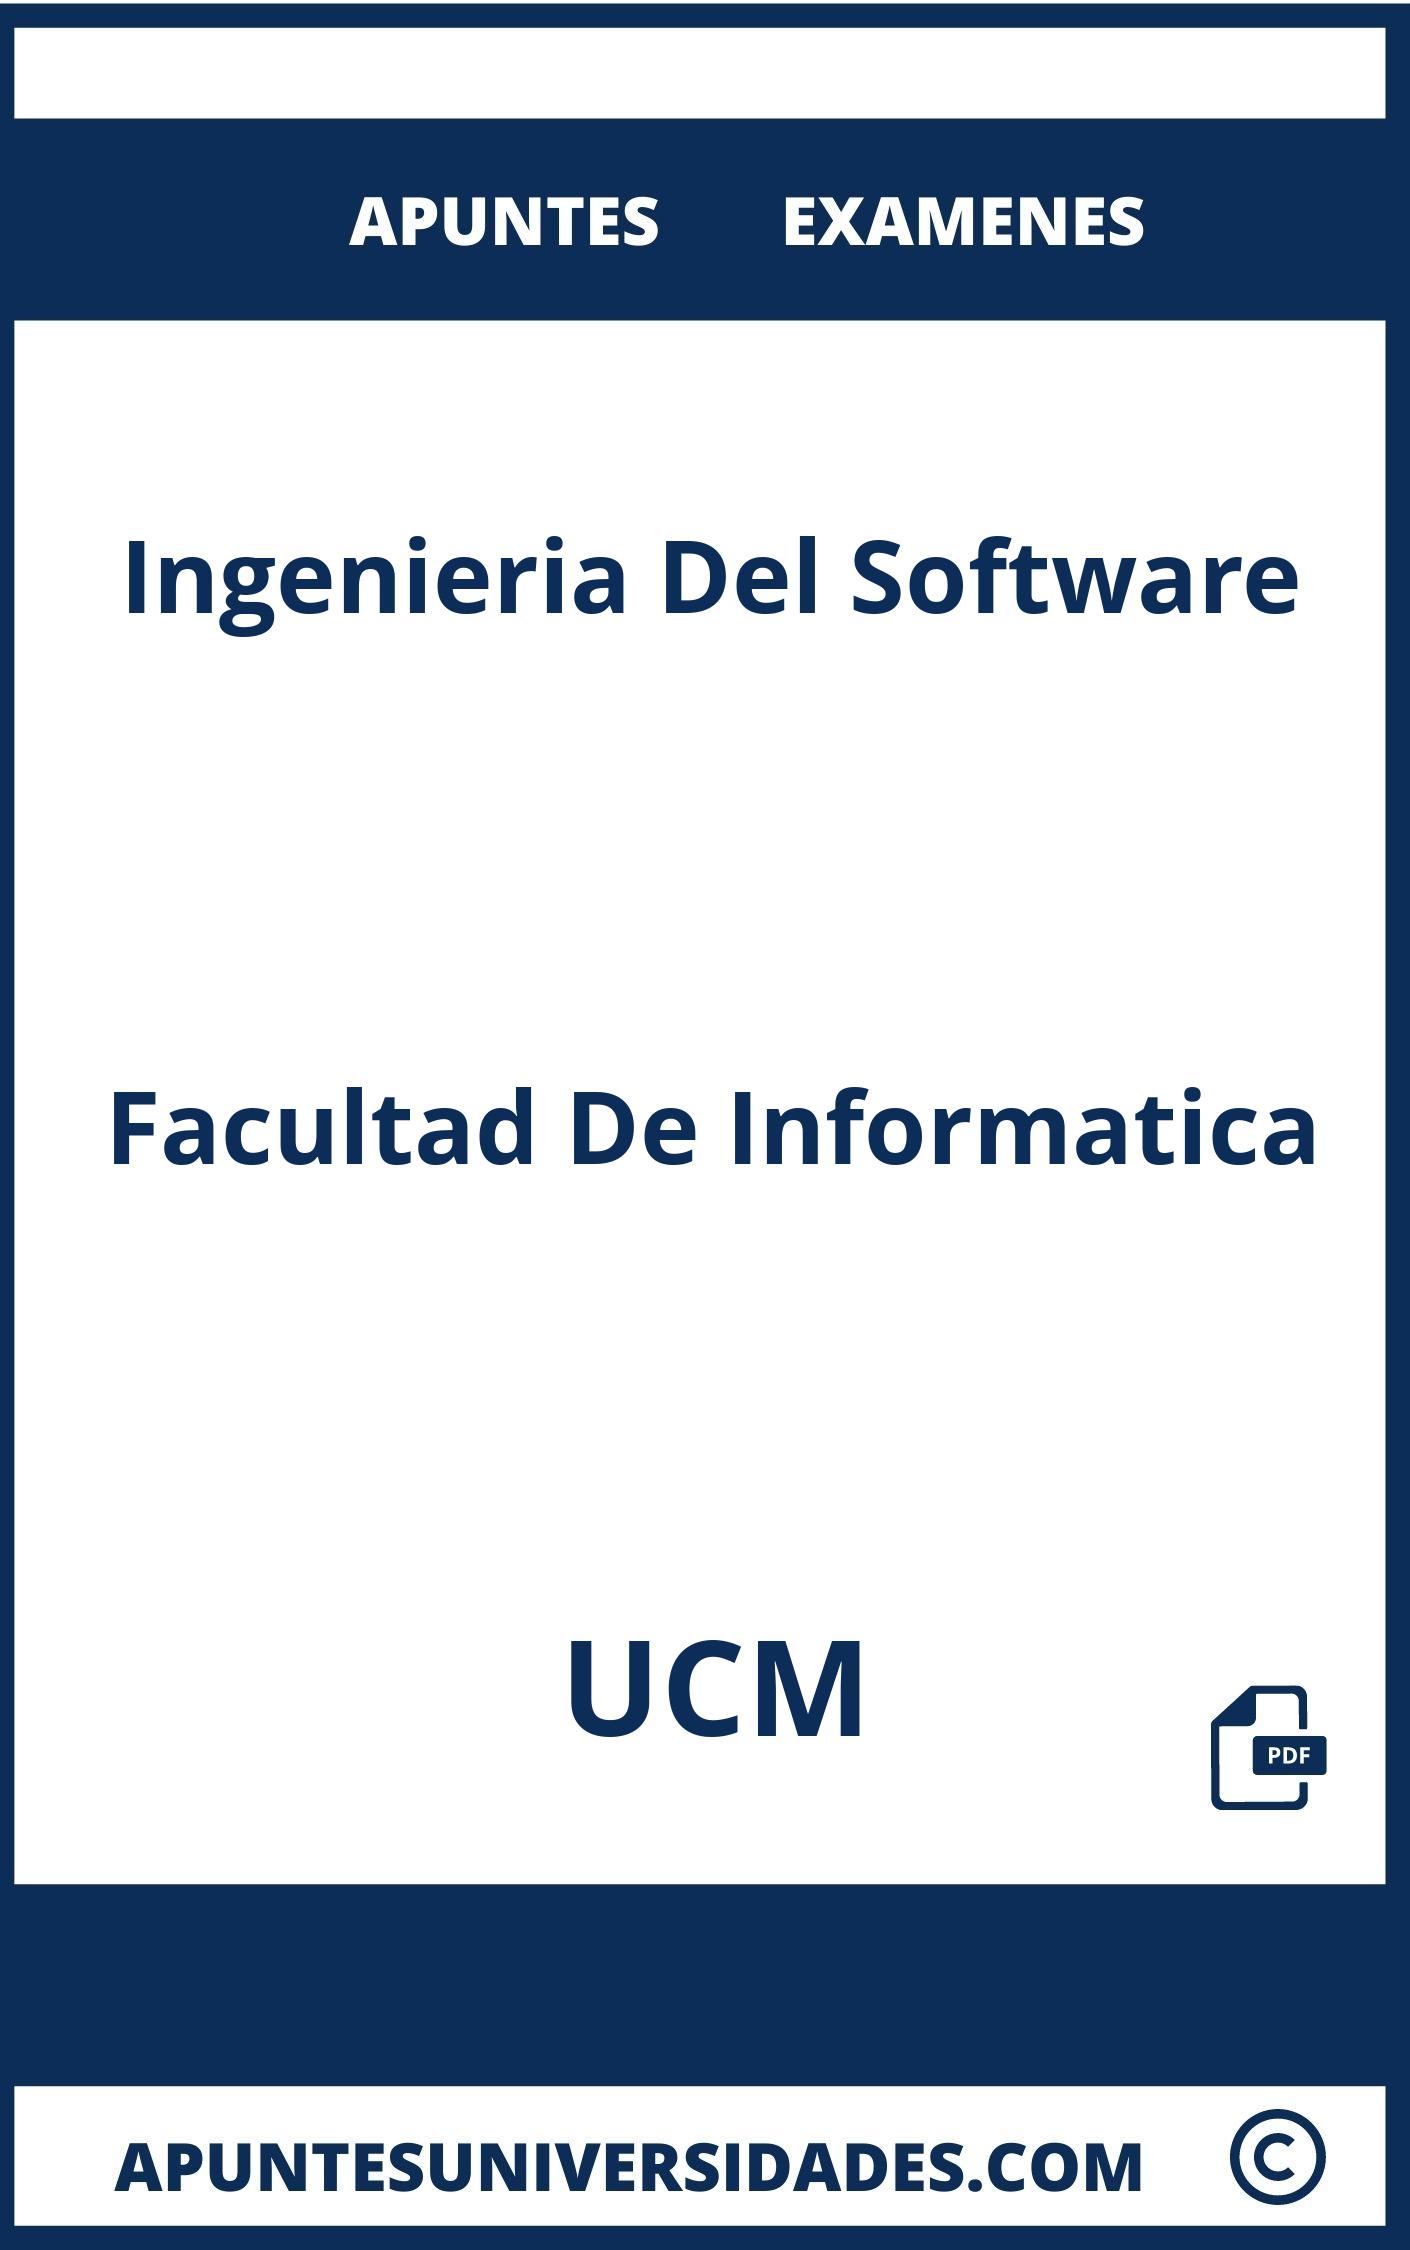 Examenes Apuntes Ingenieria Del Software UCM